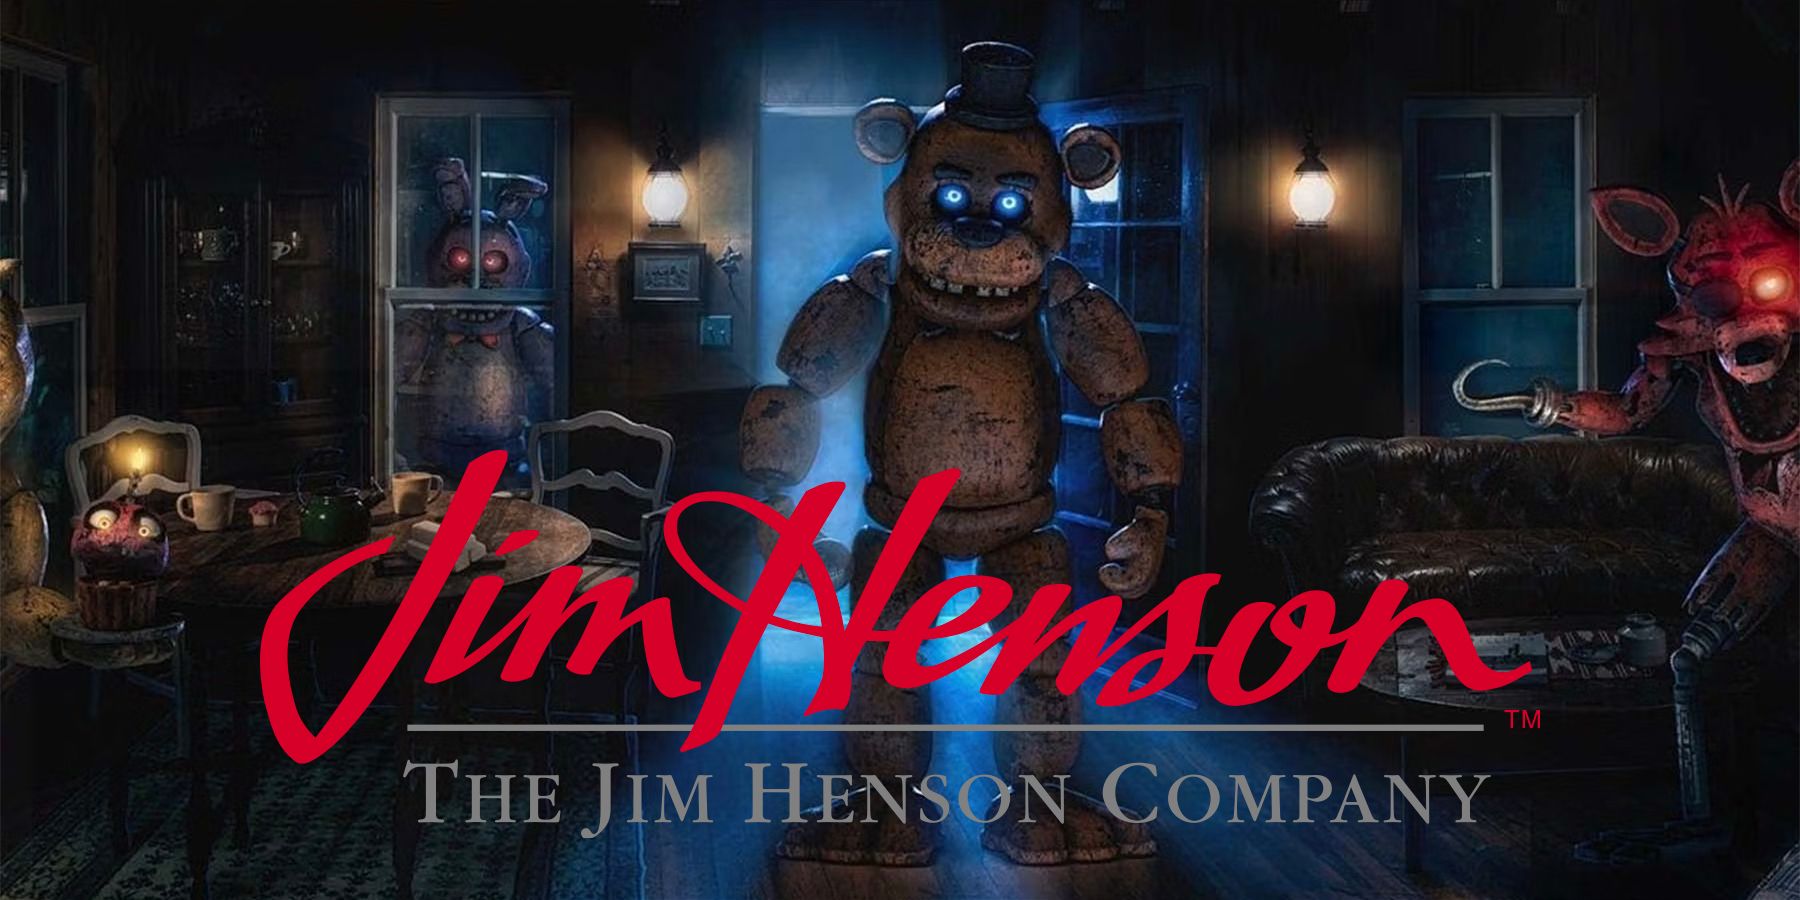 FNAF Movie Enlists Jim Henson's Creature Shop, Starts Filming Soon